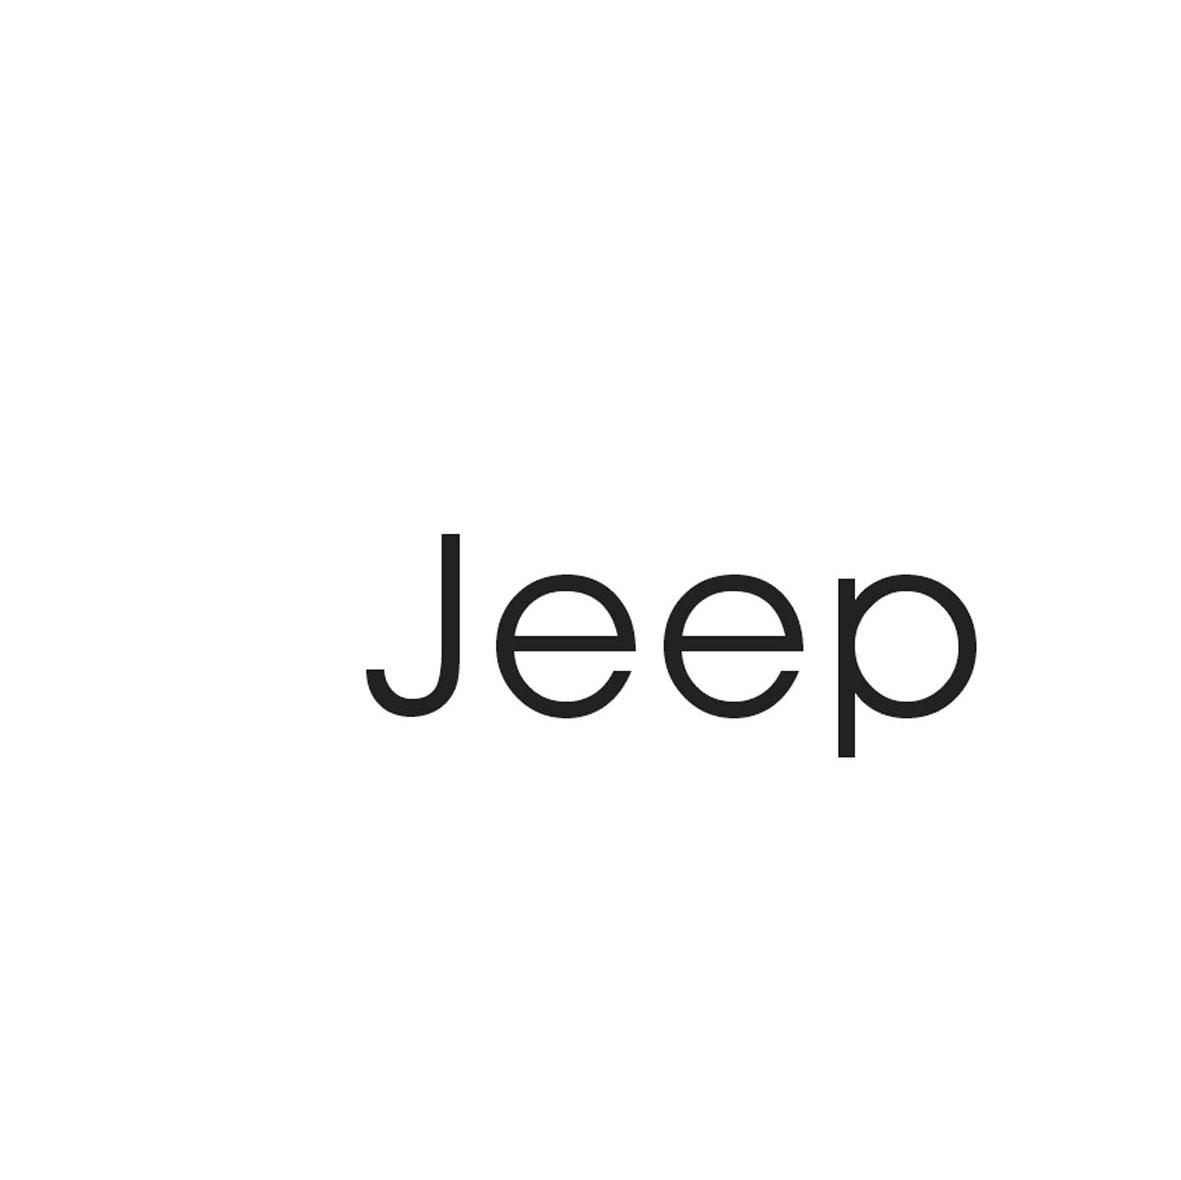 jeep注册商标查询信息 - 商标分类信息 - 天眼查